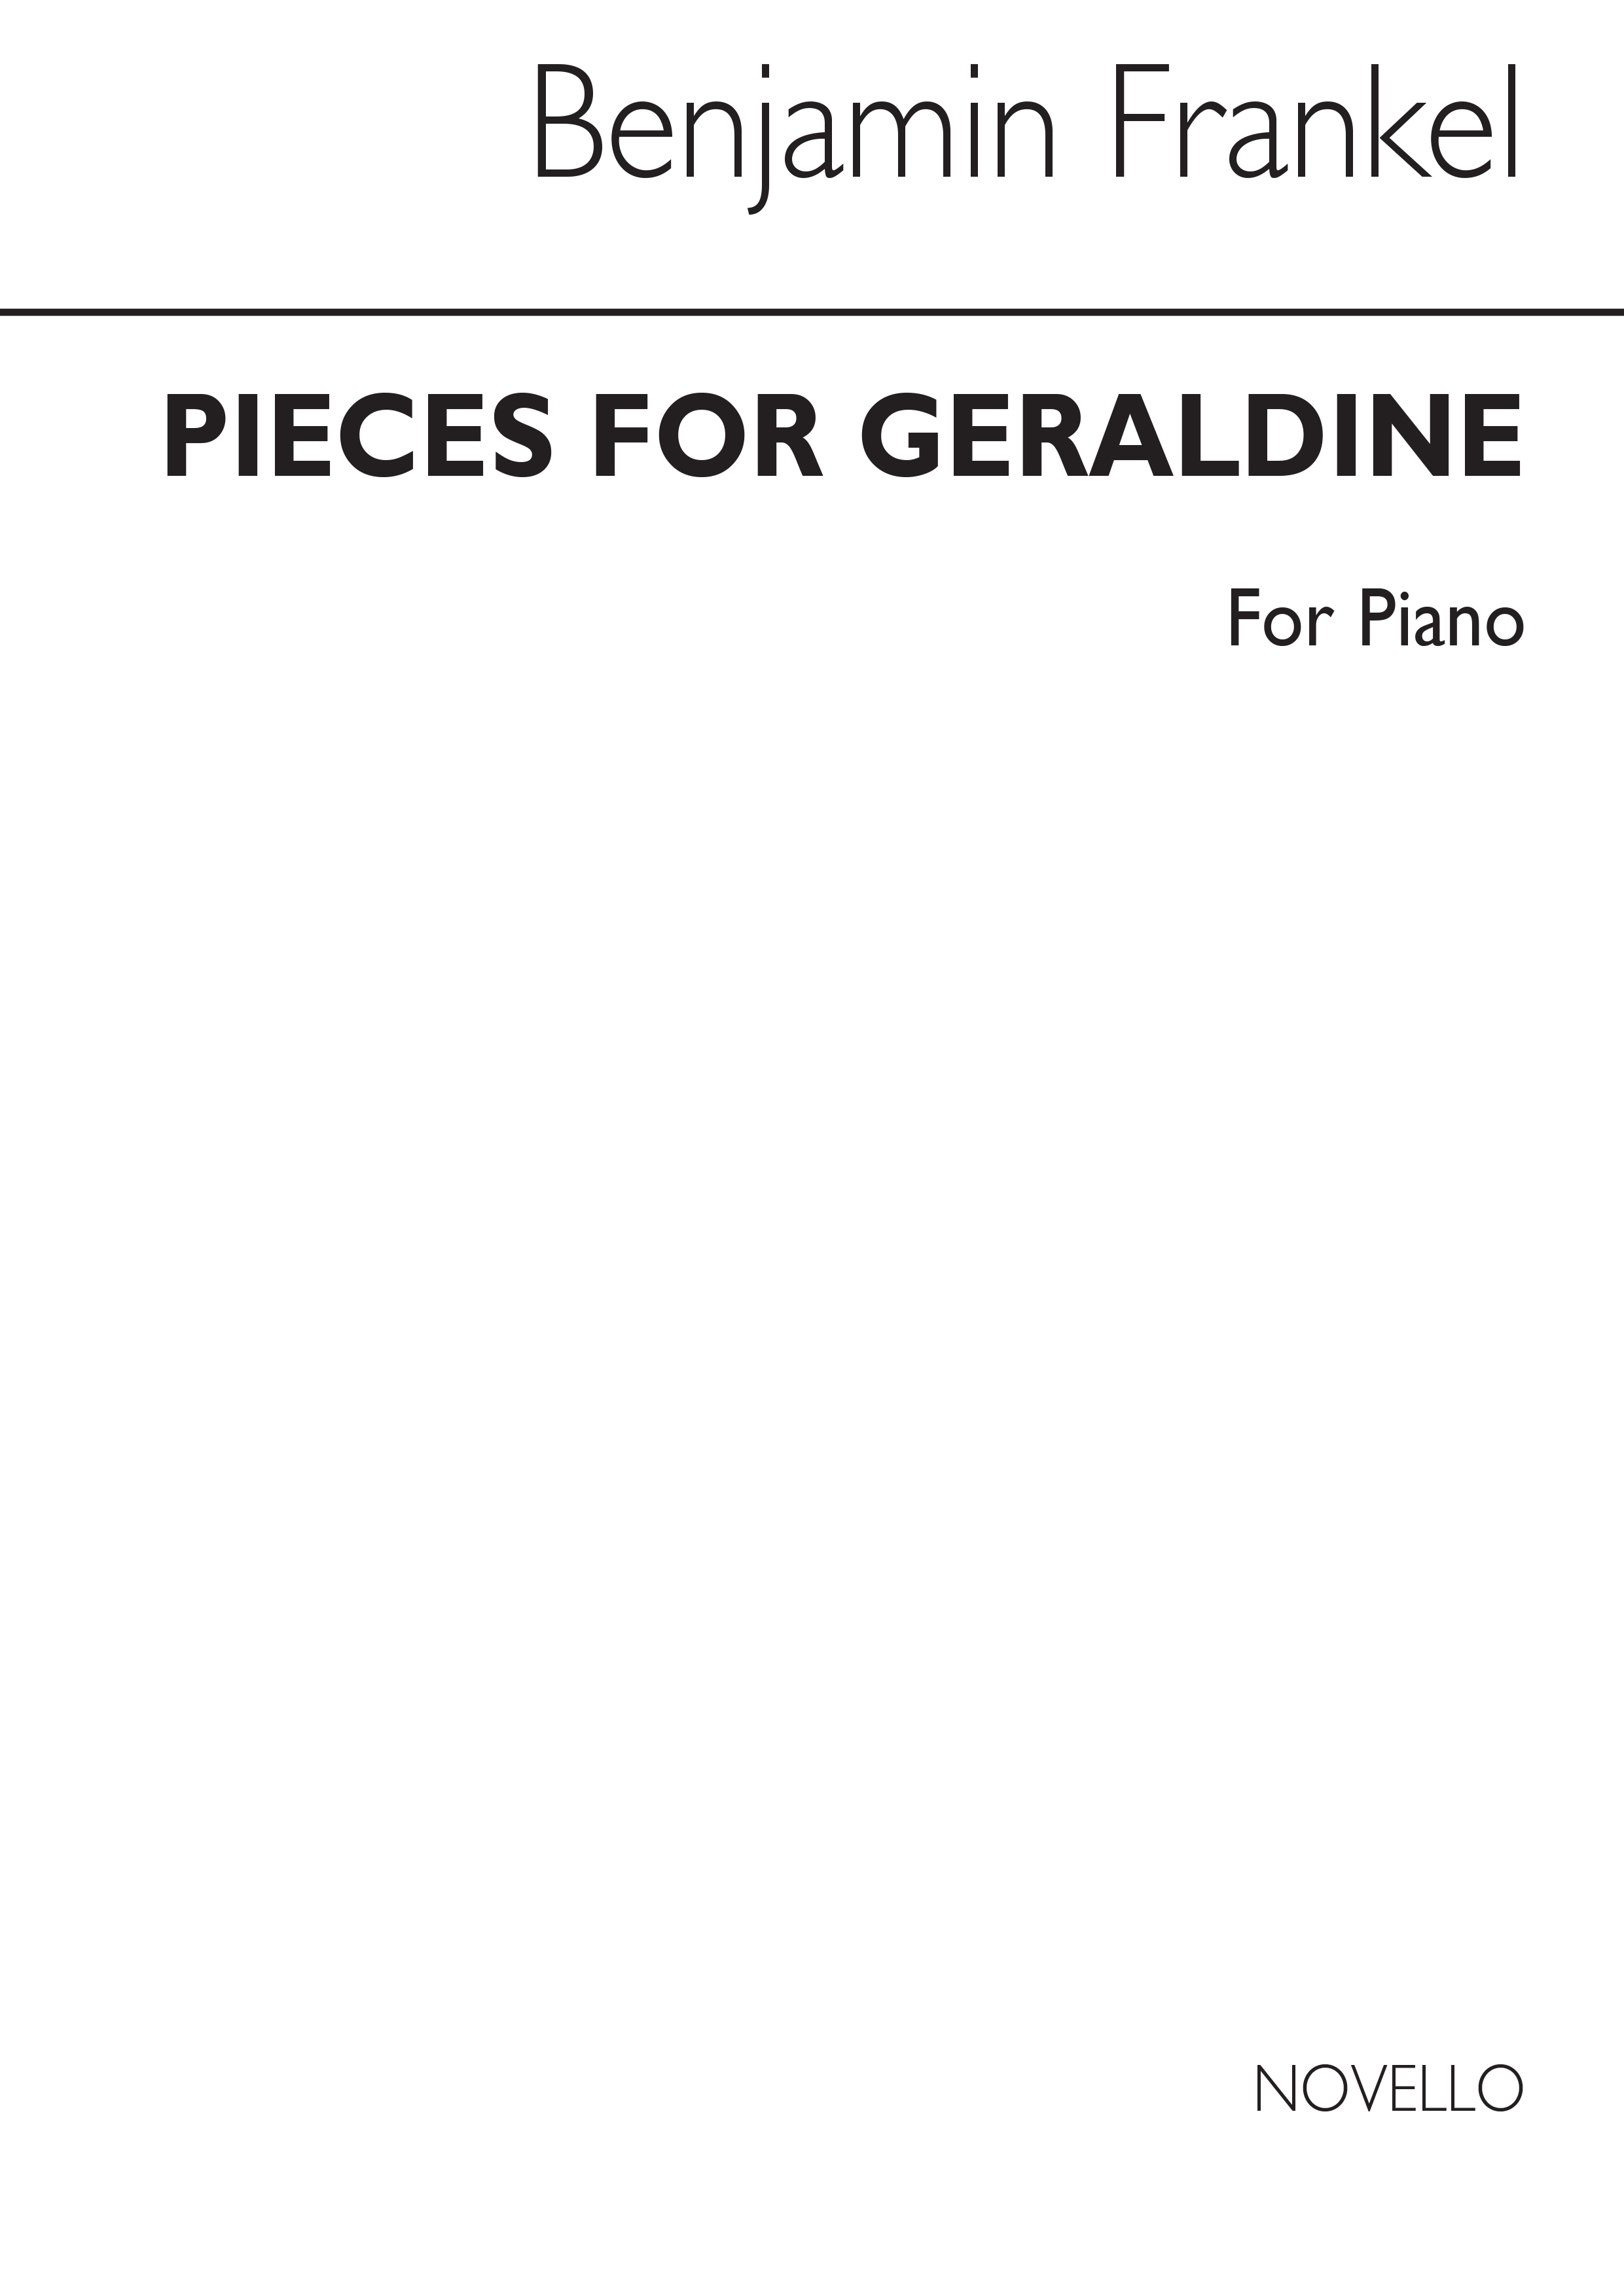 Frankel: Pieces For Geraldine for Solo Piano